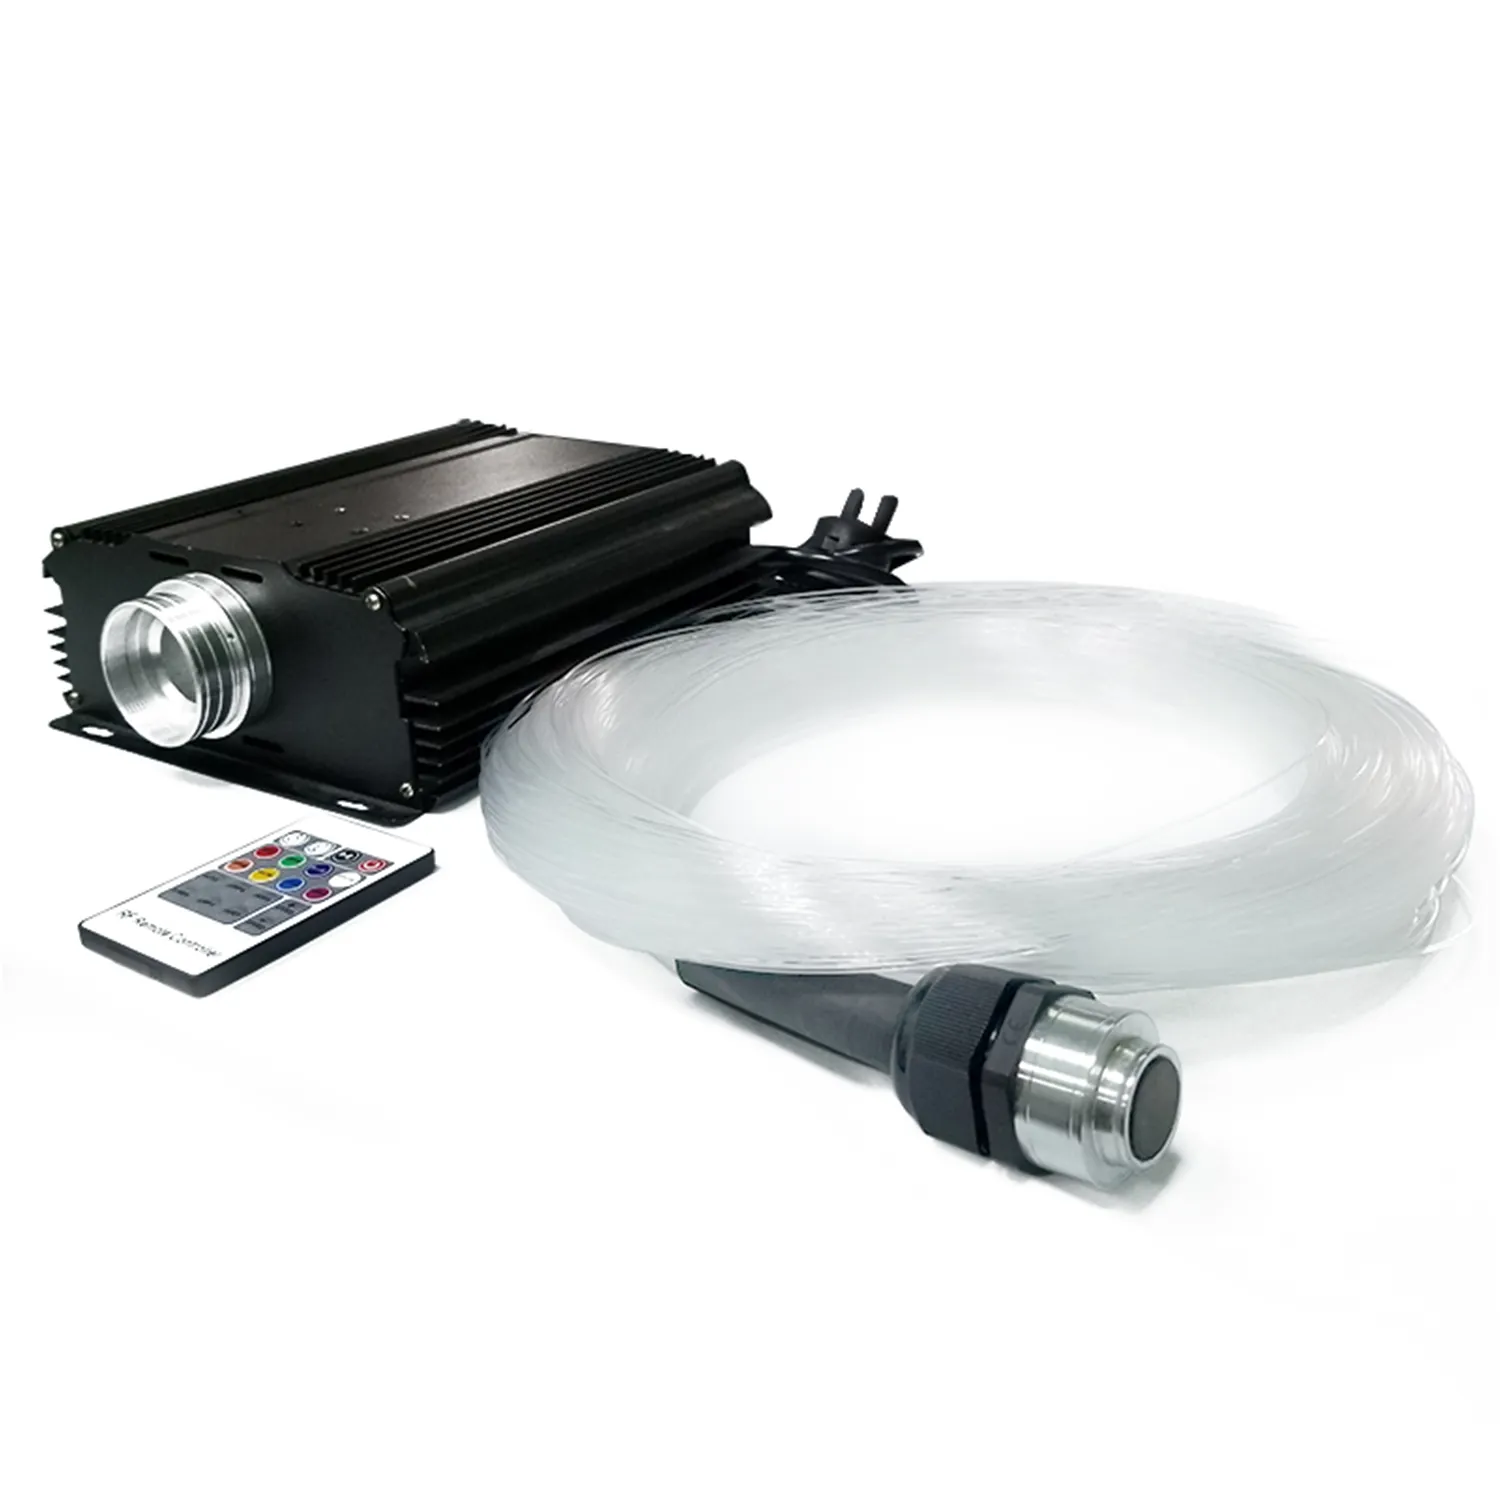 45W fiber optic RGB LED light engine with 0.75mm pmma end emitting glow plastic fiber optic light Kit